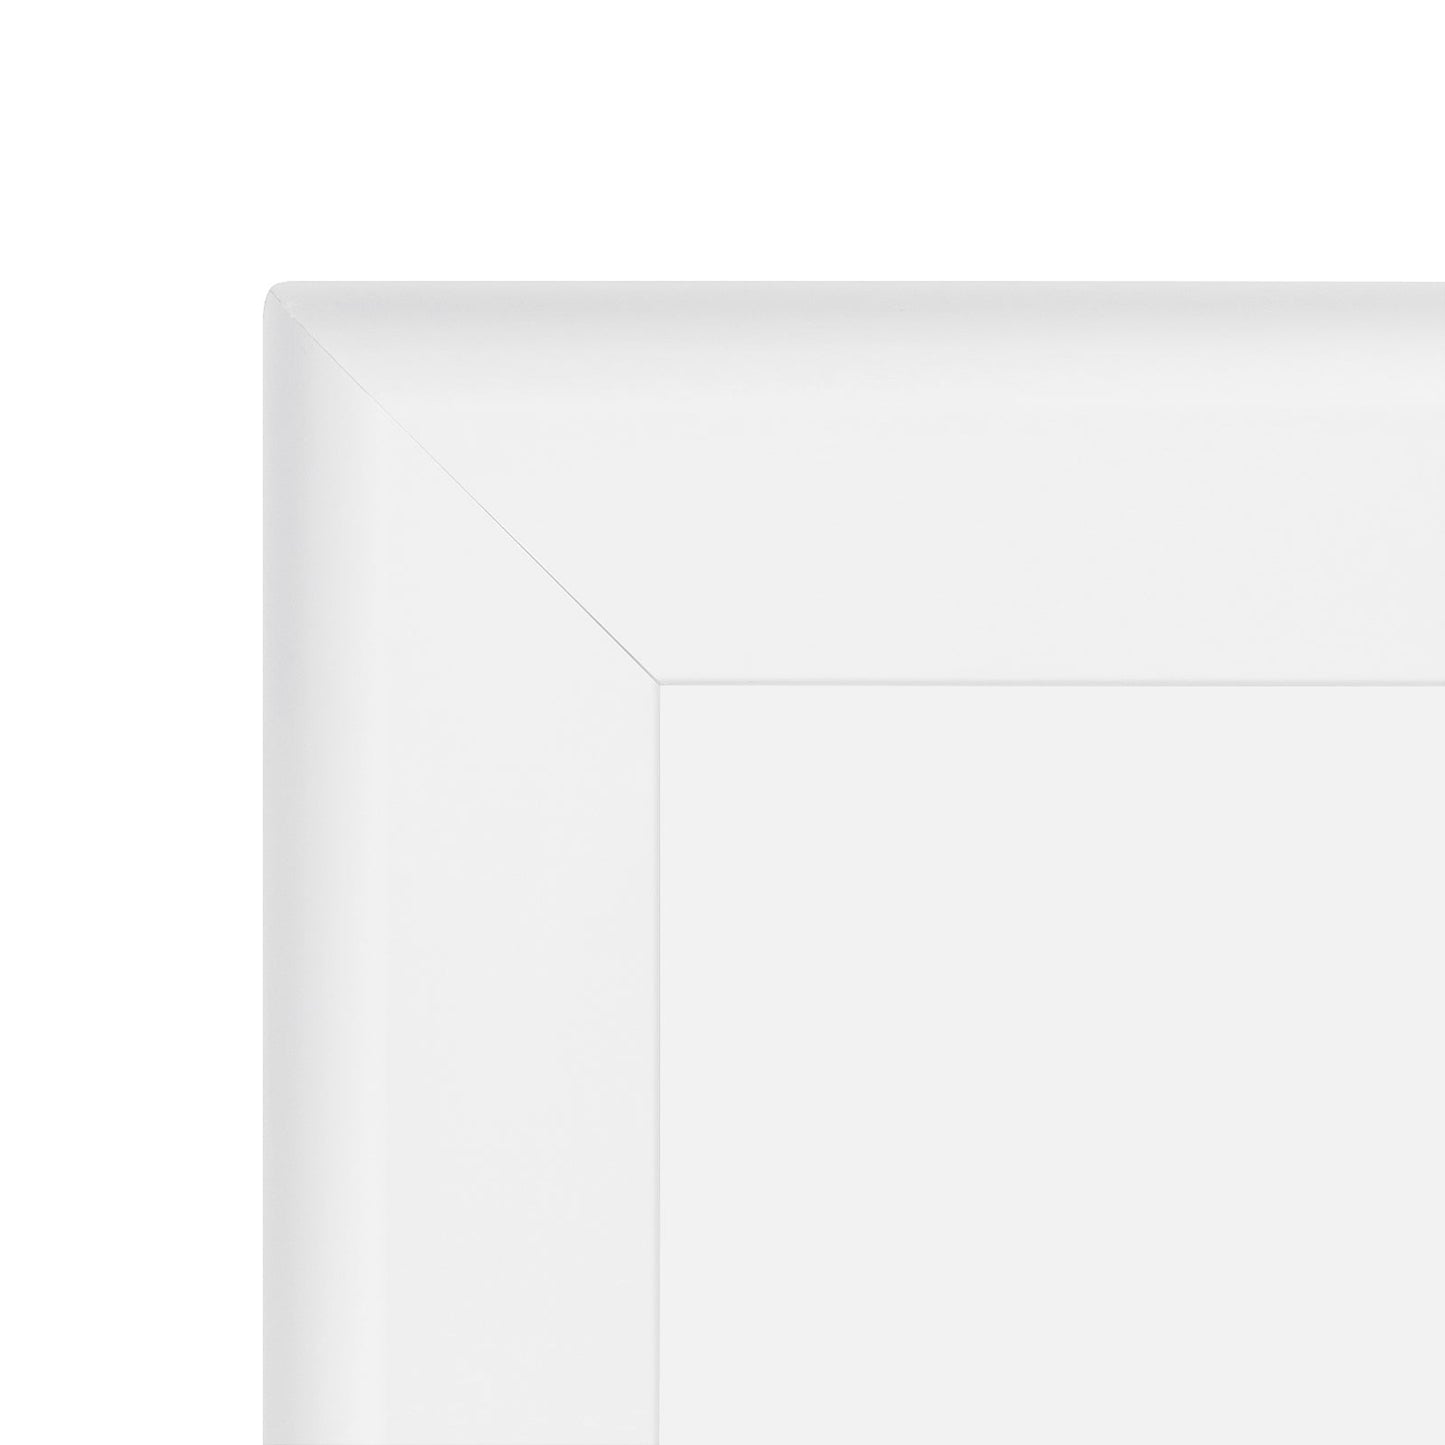 A0 White SnapeZo® Snap Frame - 1.7" Profile - Snap Frames Direct